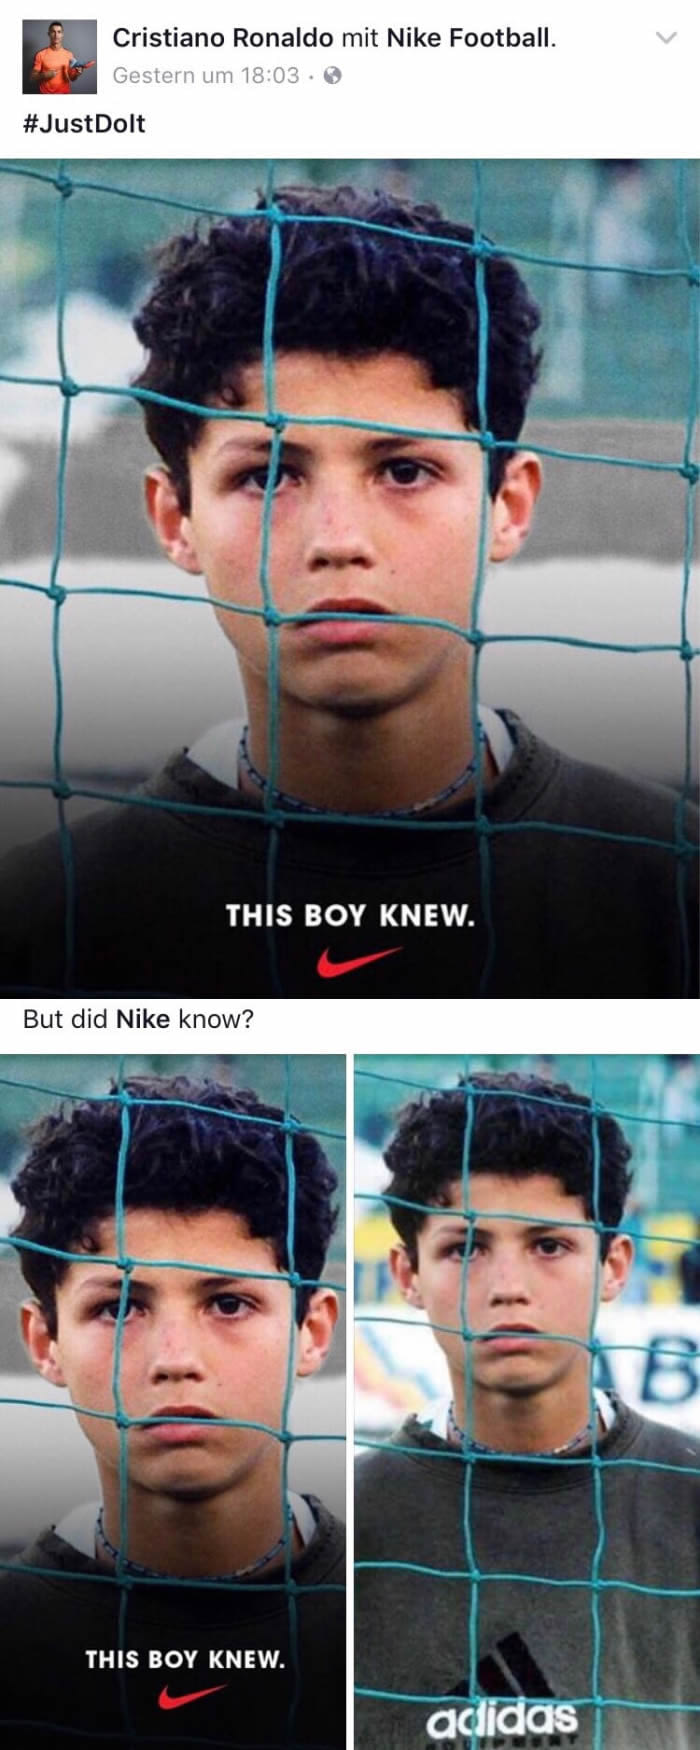 But did Nike know? Cristiano Ronaldo vs Nike